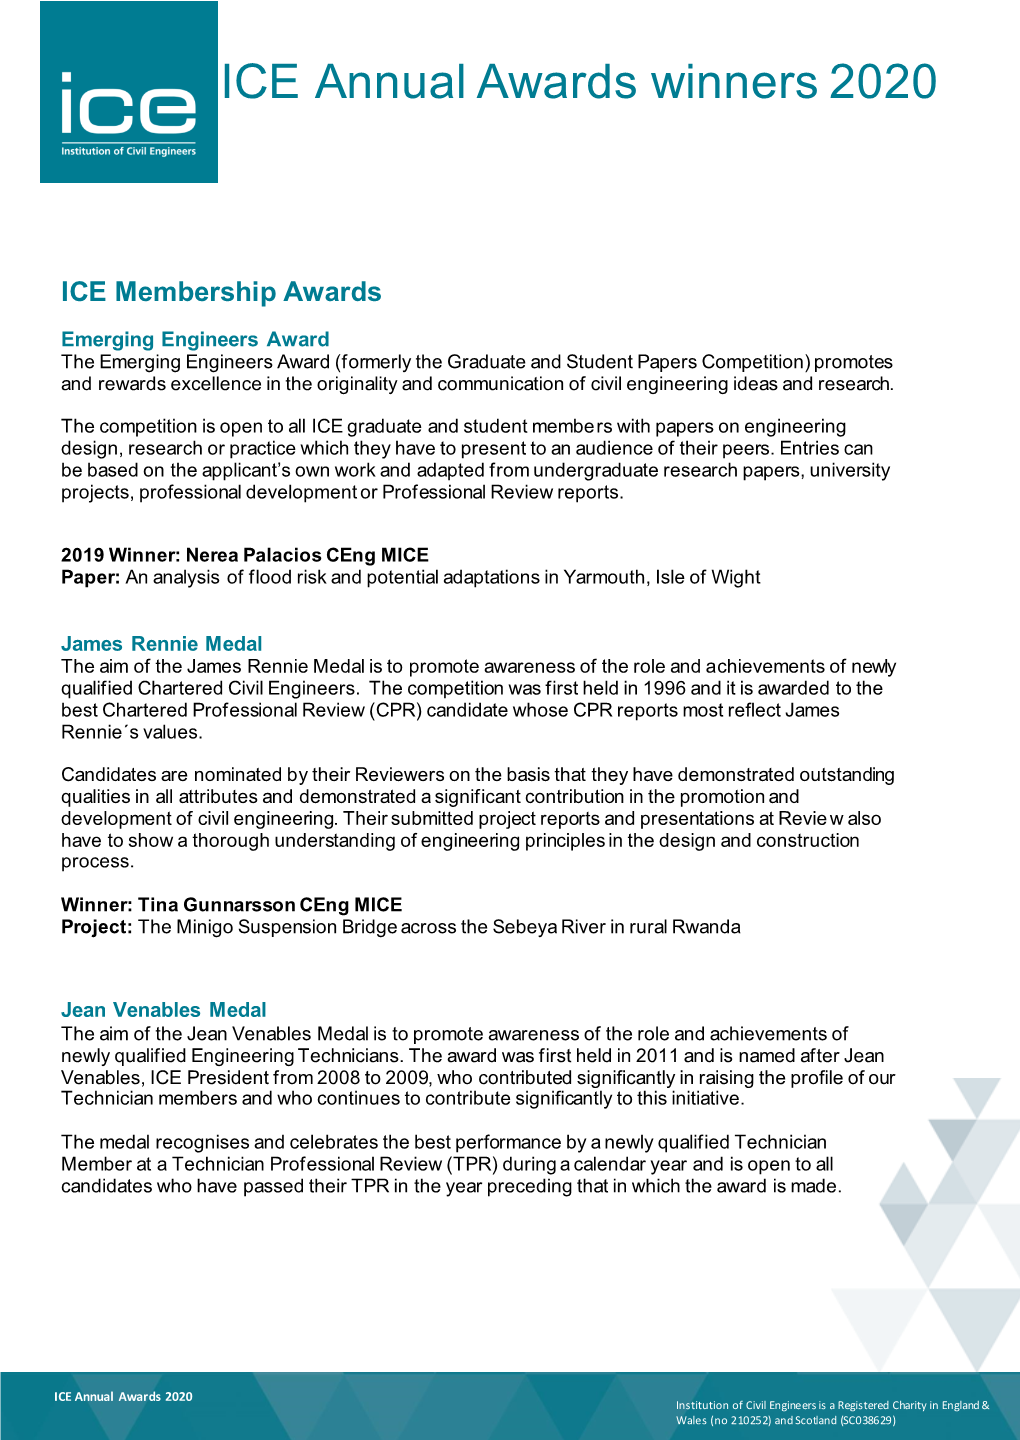 ICE Awards Winners 2020